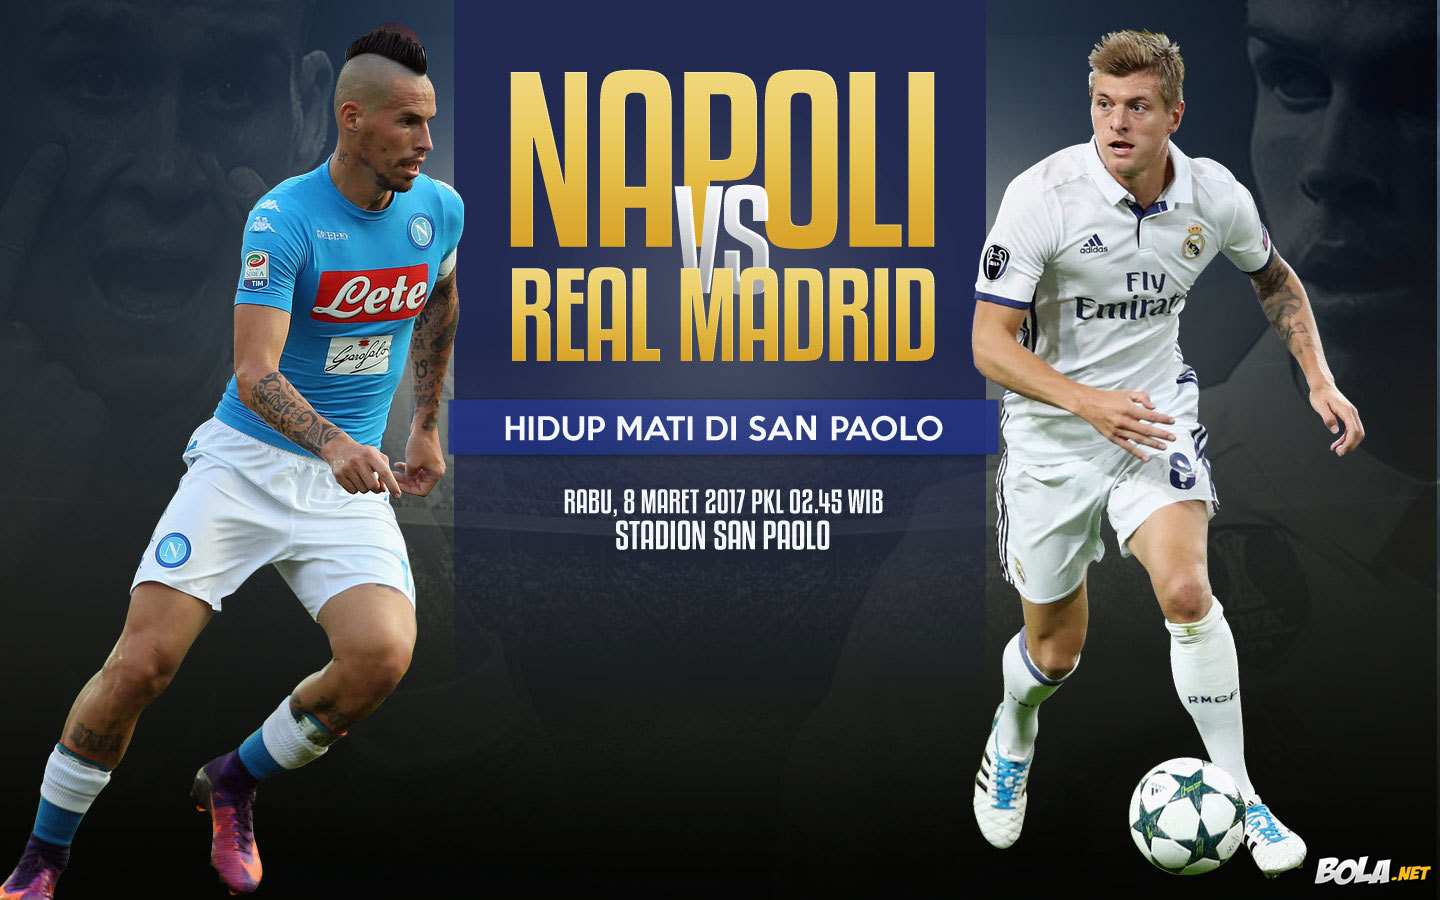 Deskripsi : Wallpaper Napoli Vs Real Madrid, size: 1440x900